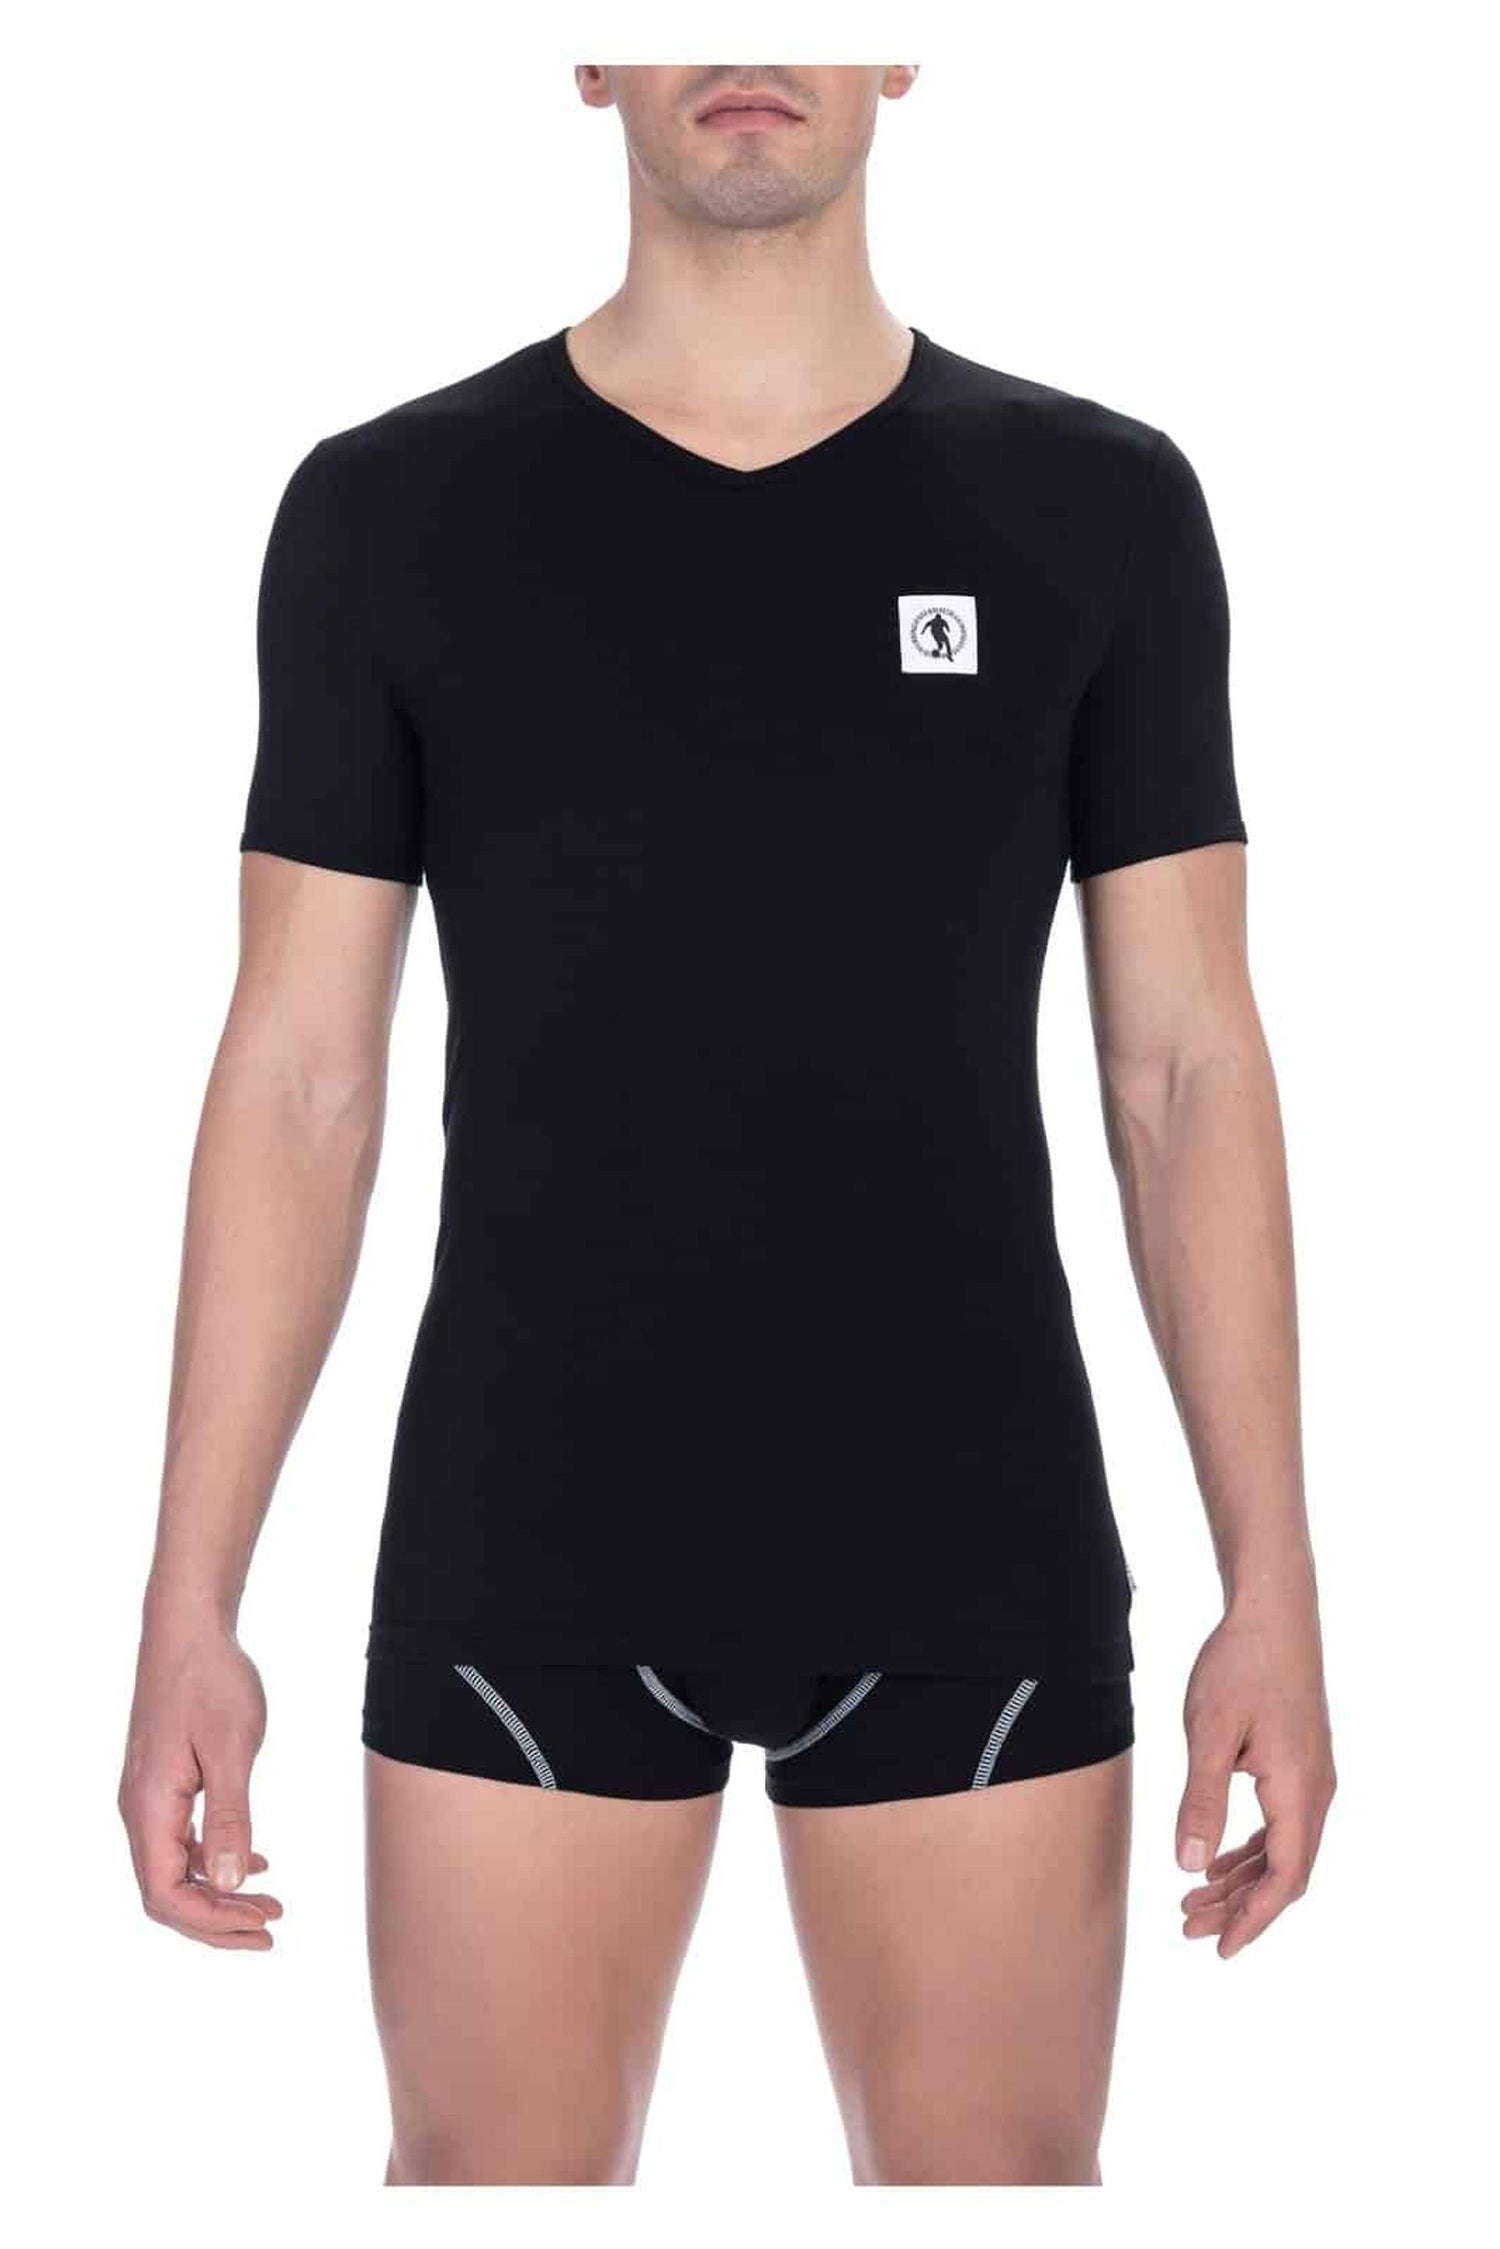 Men's Underwear T-shirts - Undershirts - Guocali.com